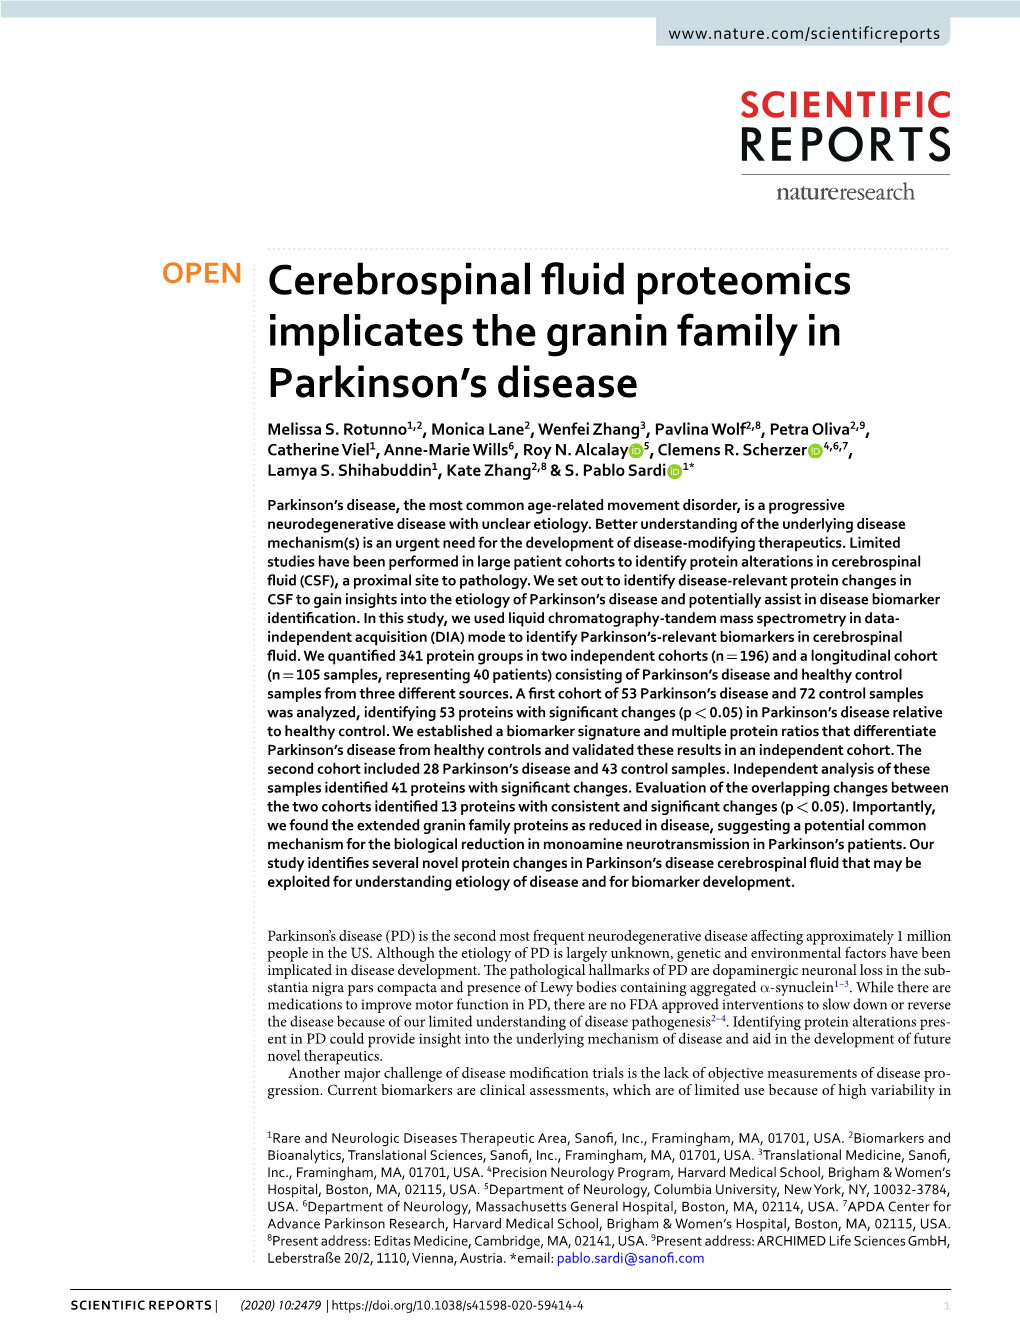 Cerebrospinal Fluid Proteomics Implicates the Granin Family in Parkinson's Disease